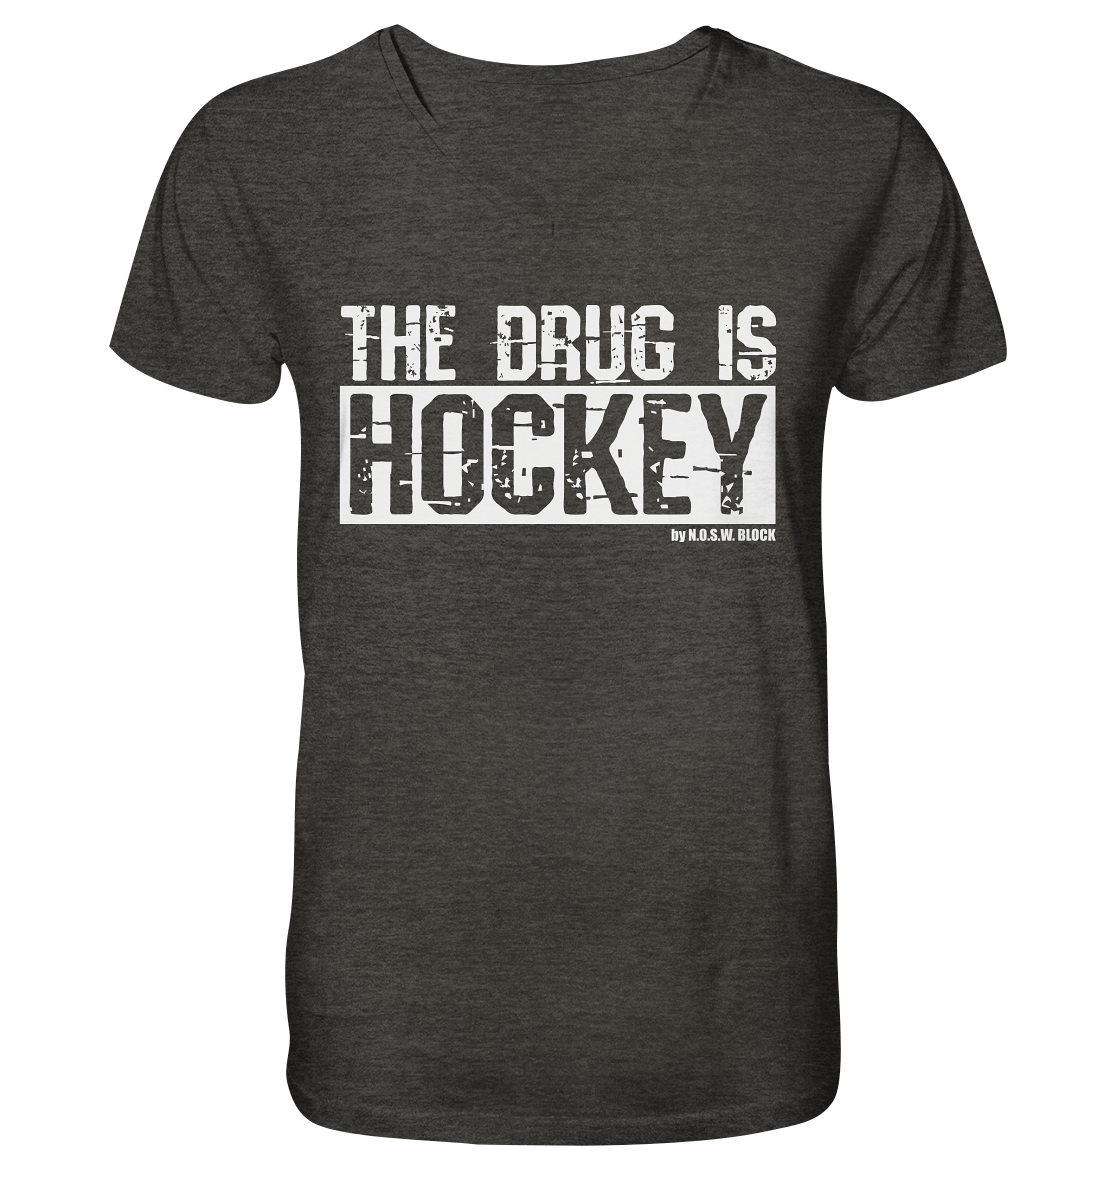 N.O.S.W. BLOCK Fanblock Shirt "THE DRUG IS HOCKEY" Männer Organic V-Neck T-Shirt dark heather grau